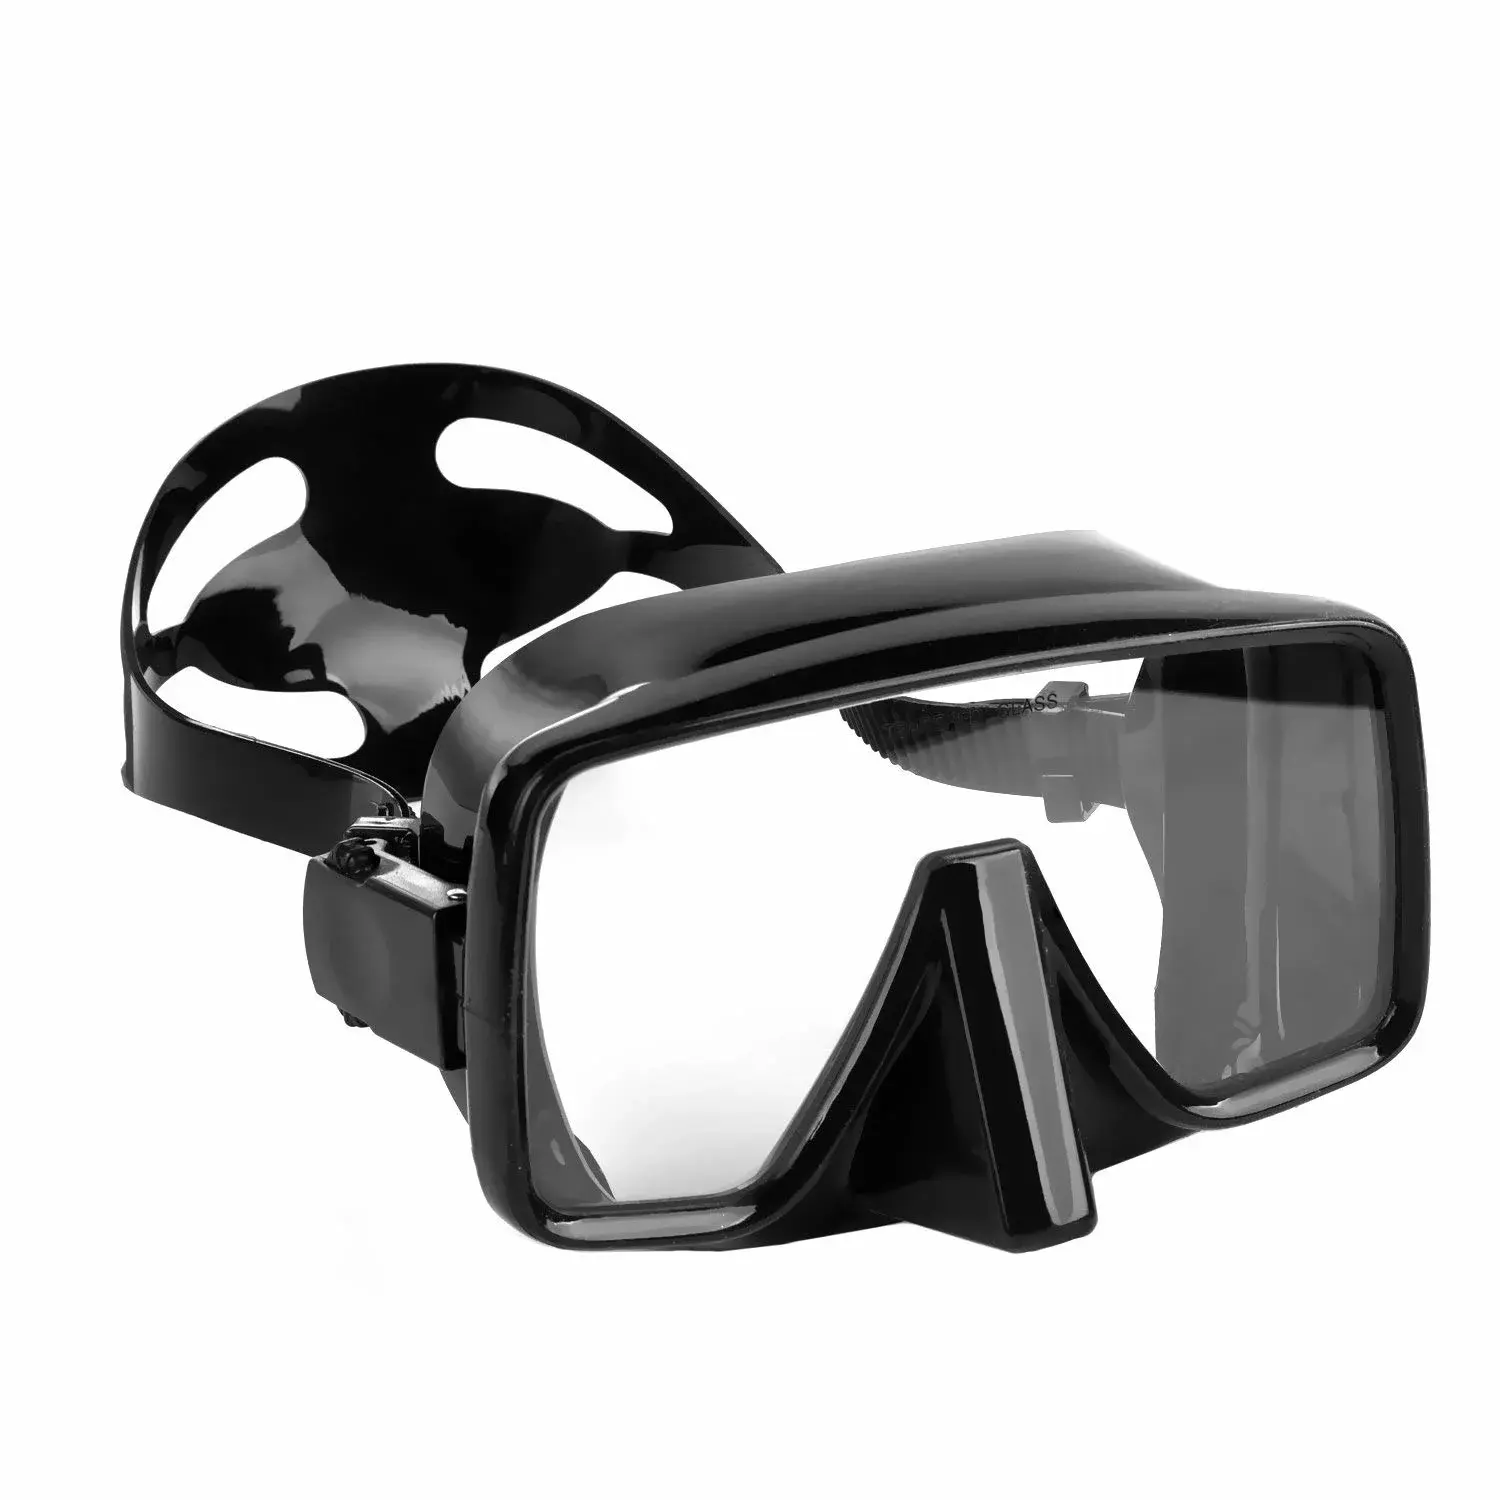 Harga Grosir Murah Masker Selam Permukaan Peralatan Bawah Air Anti Kabut Bocor untuk Snorkeling